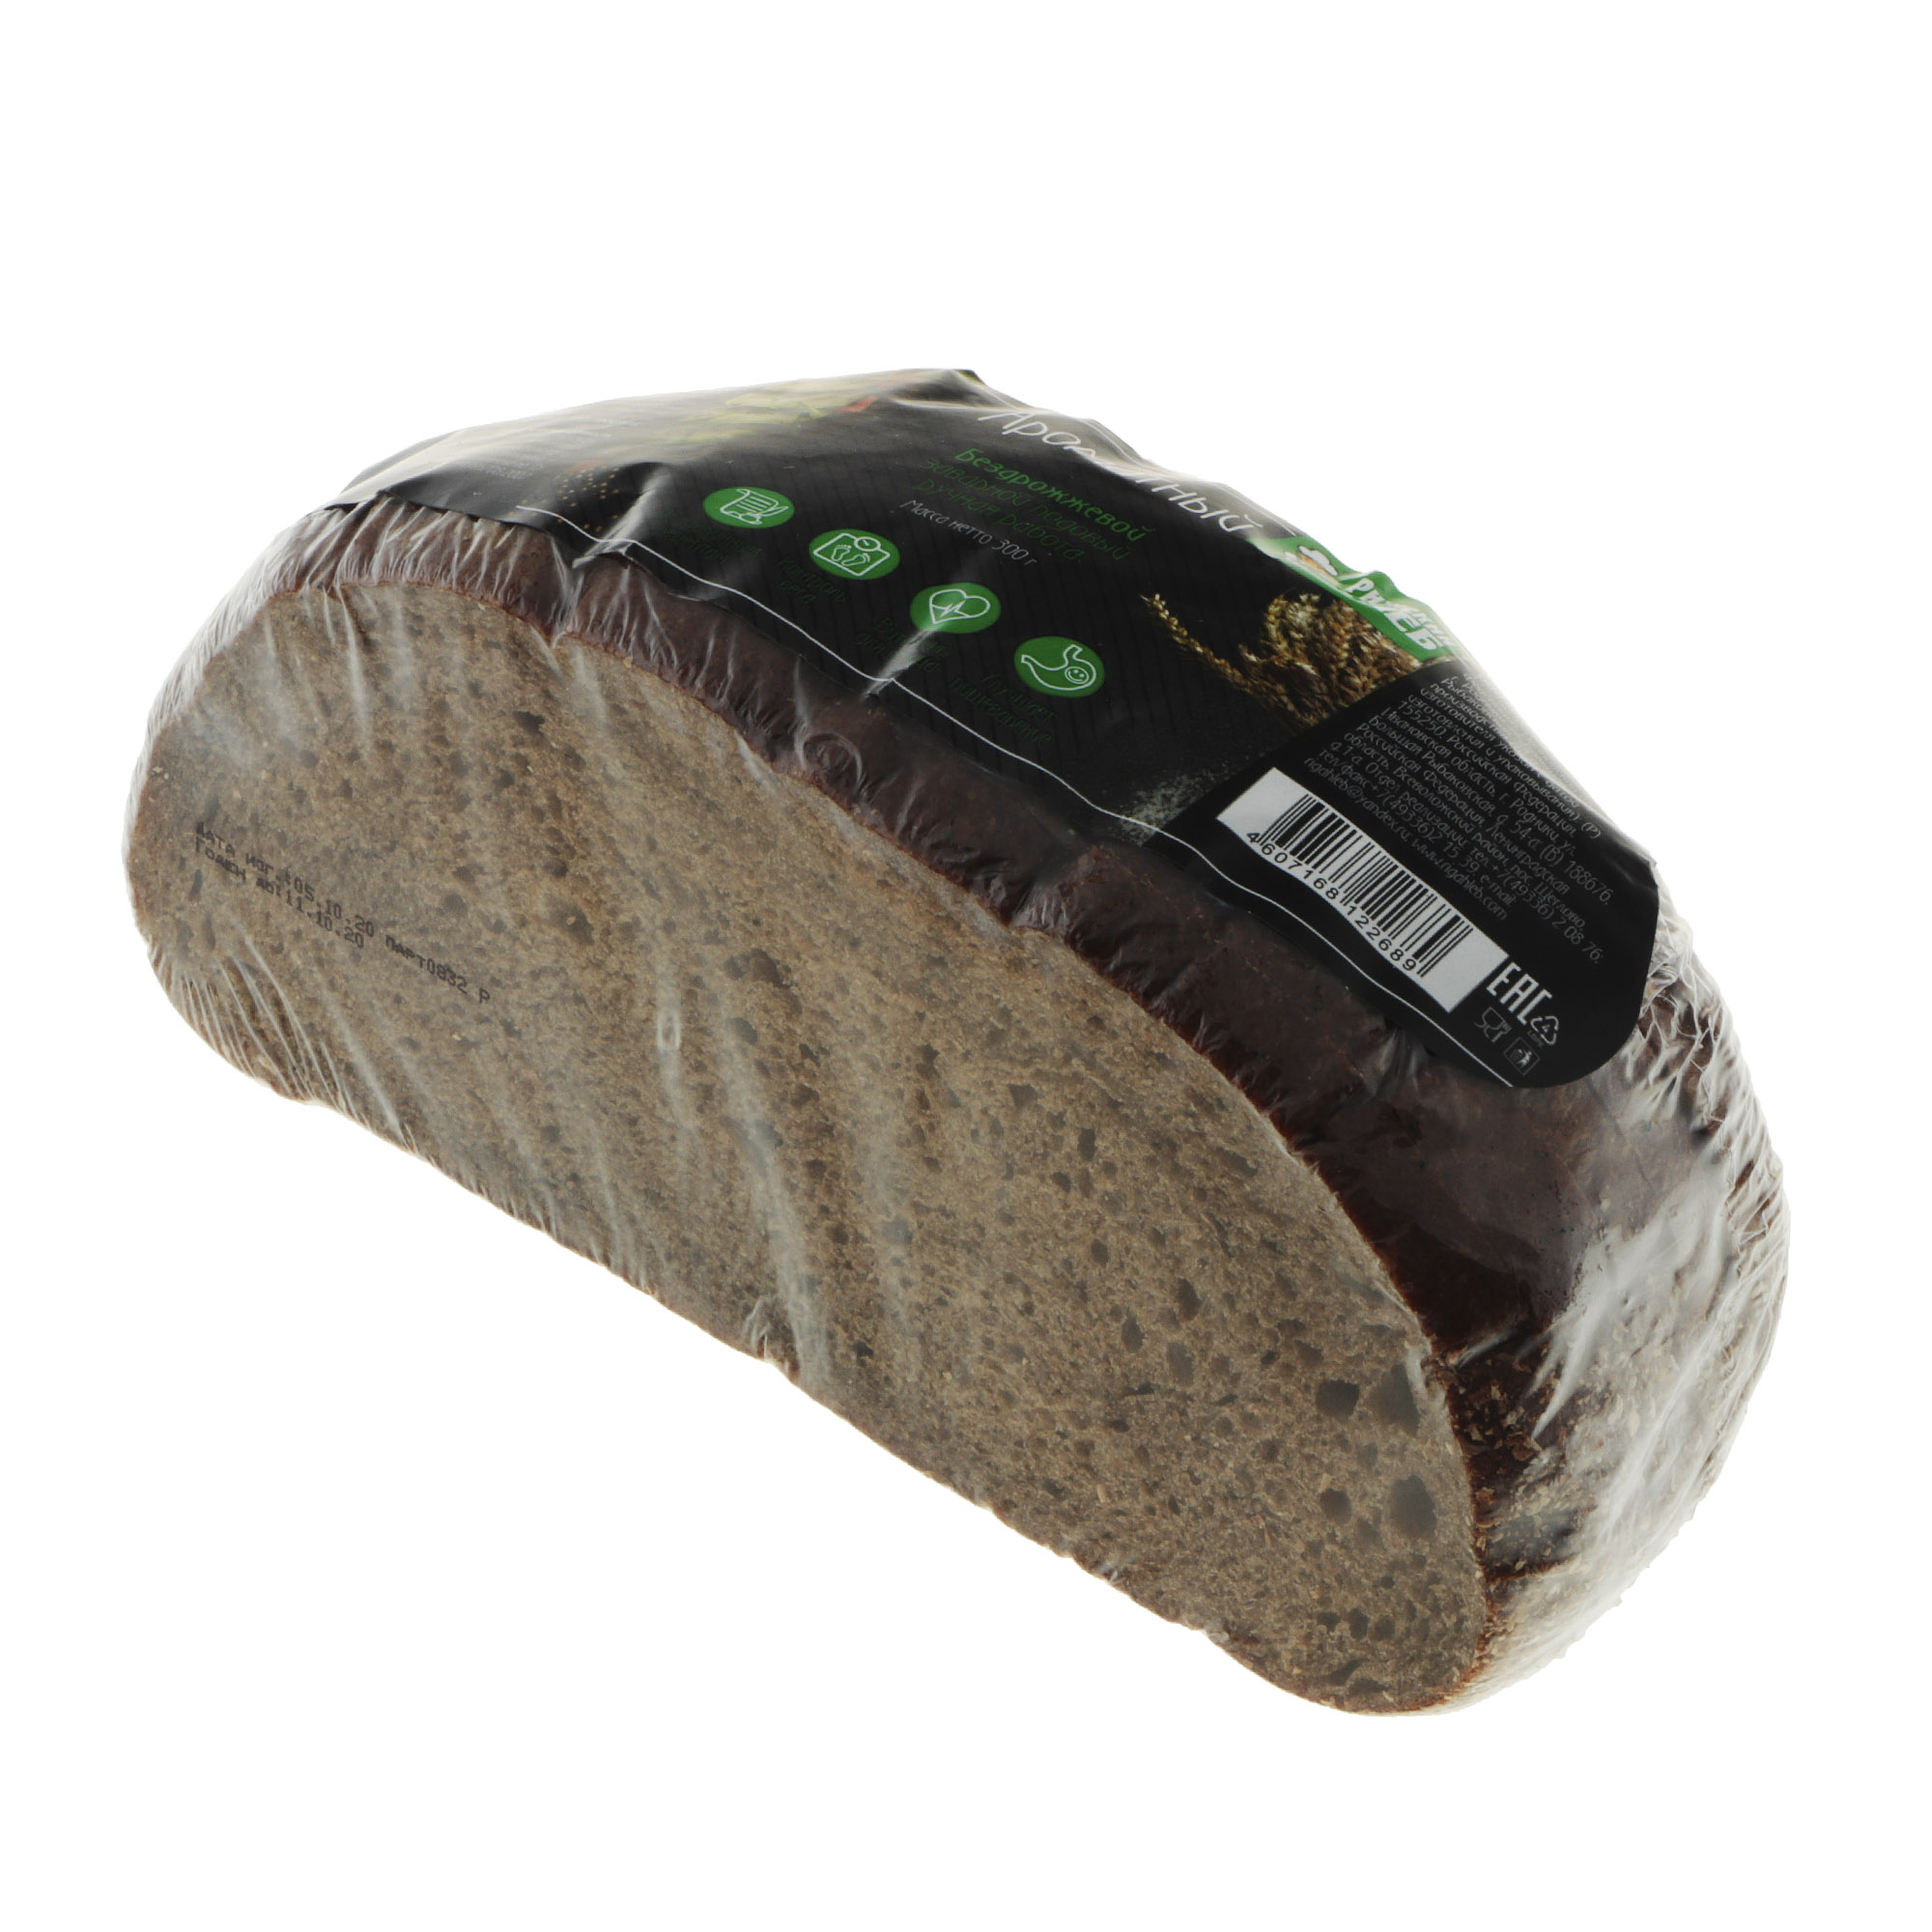 Хлеб Рижский хлеб ароматный 300 г хлеб рижский хлеб ржаной со злаками бездрожжевой 300 г